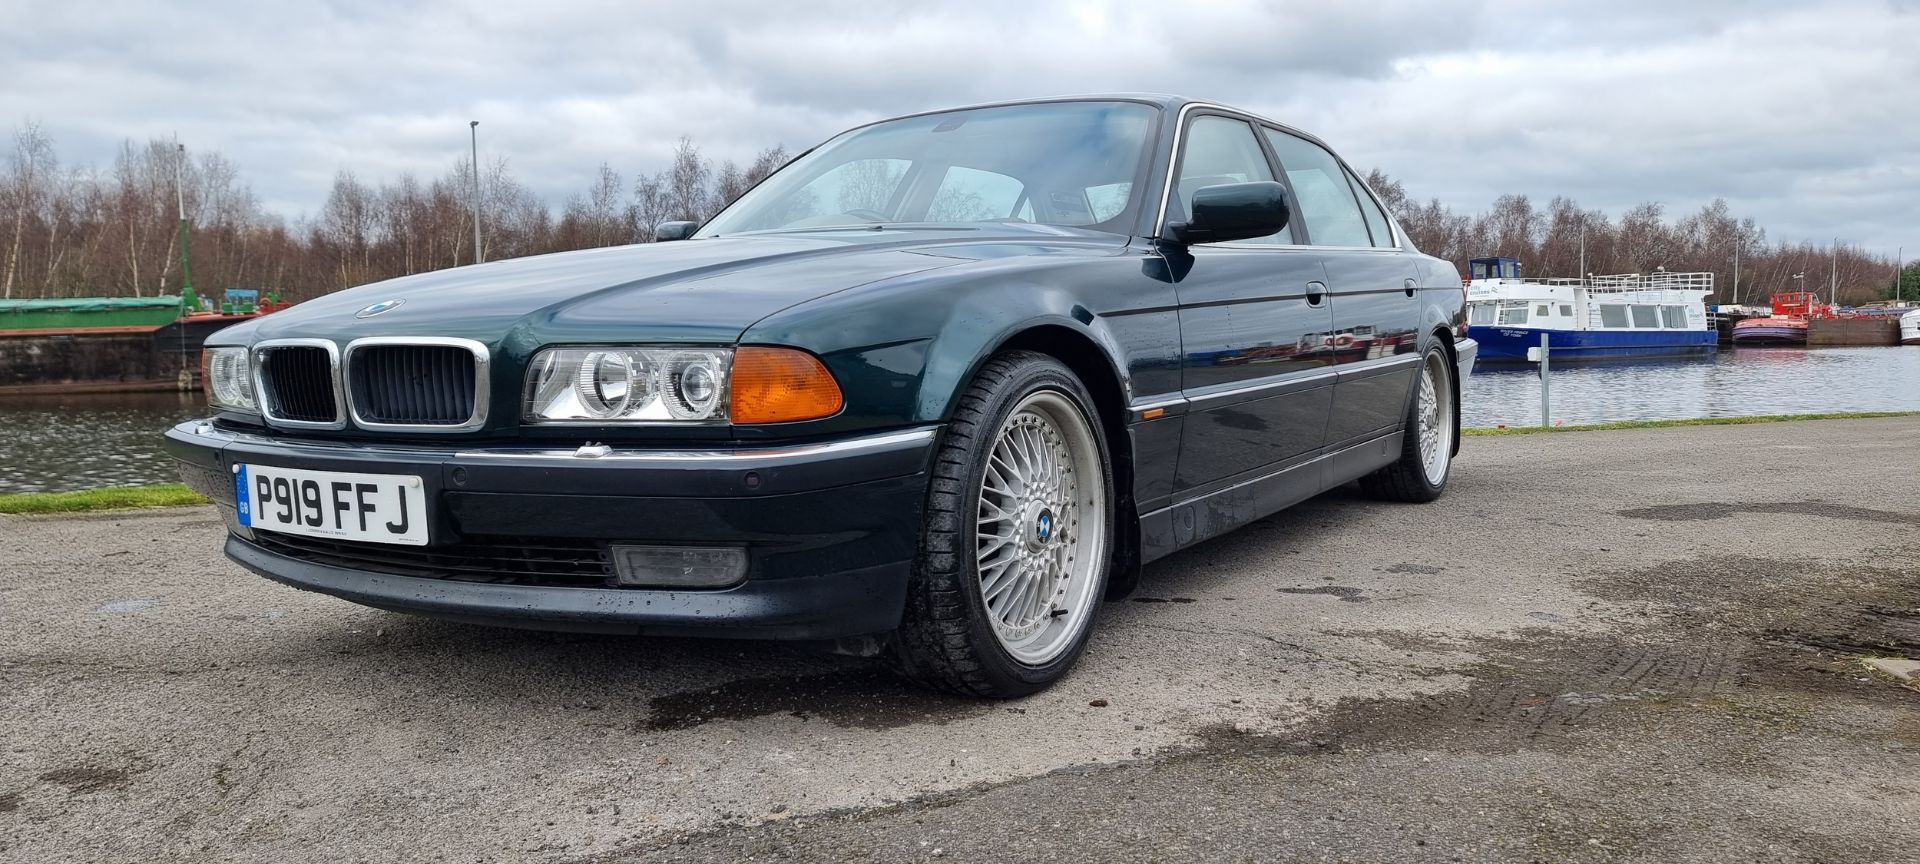 1996 BMW 740iL, 4398cc. Registration number P919 FFJ. Chassis number WBAGJ82060DB29182. Engine - Image 2 of 30